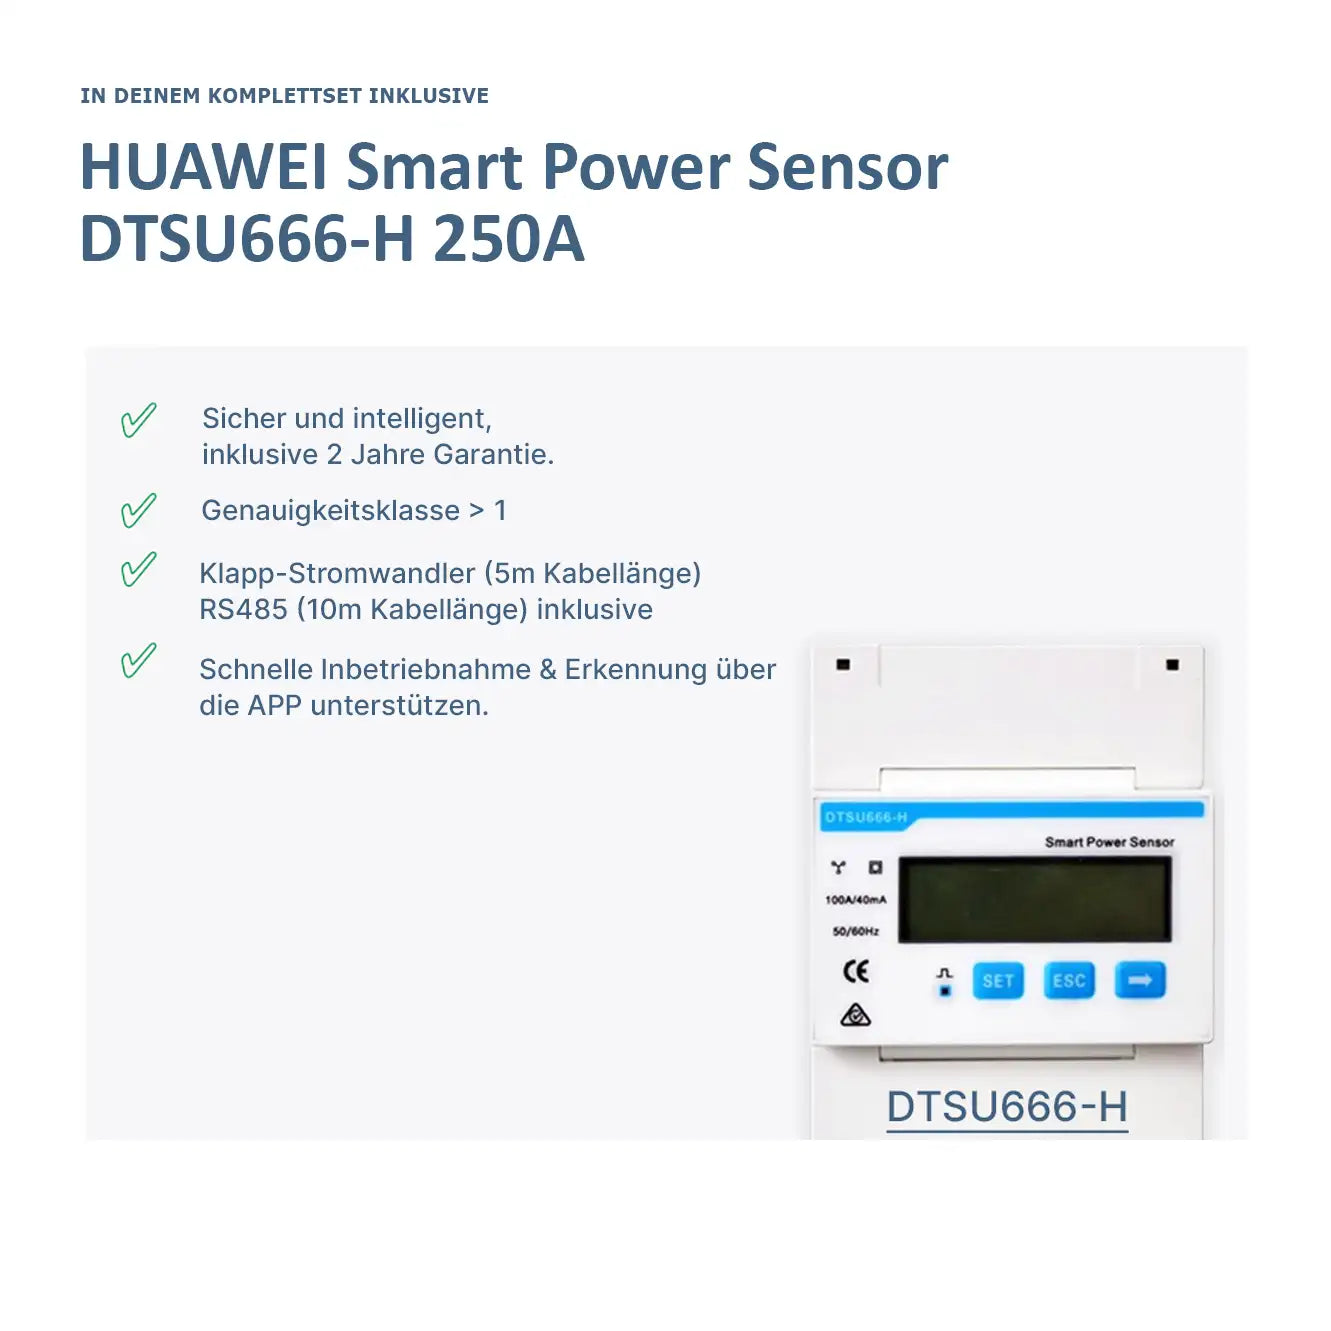 Huawei Omvormer 10KW LUNA2000 5s0 Set